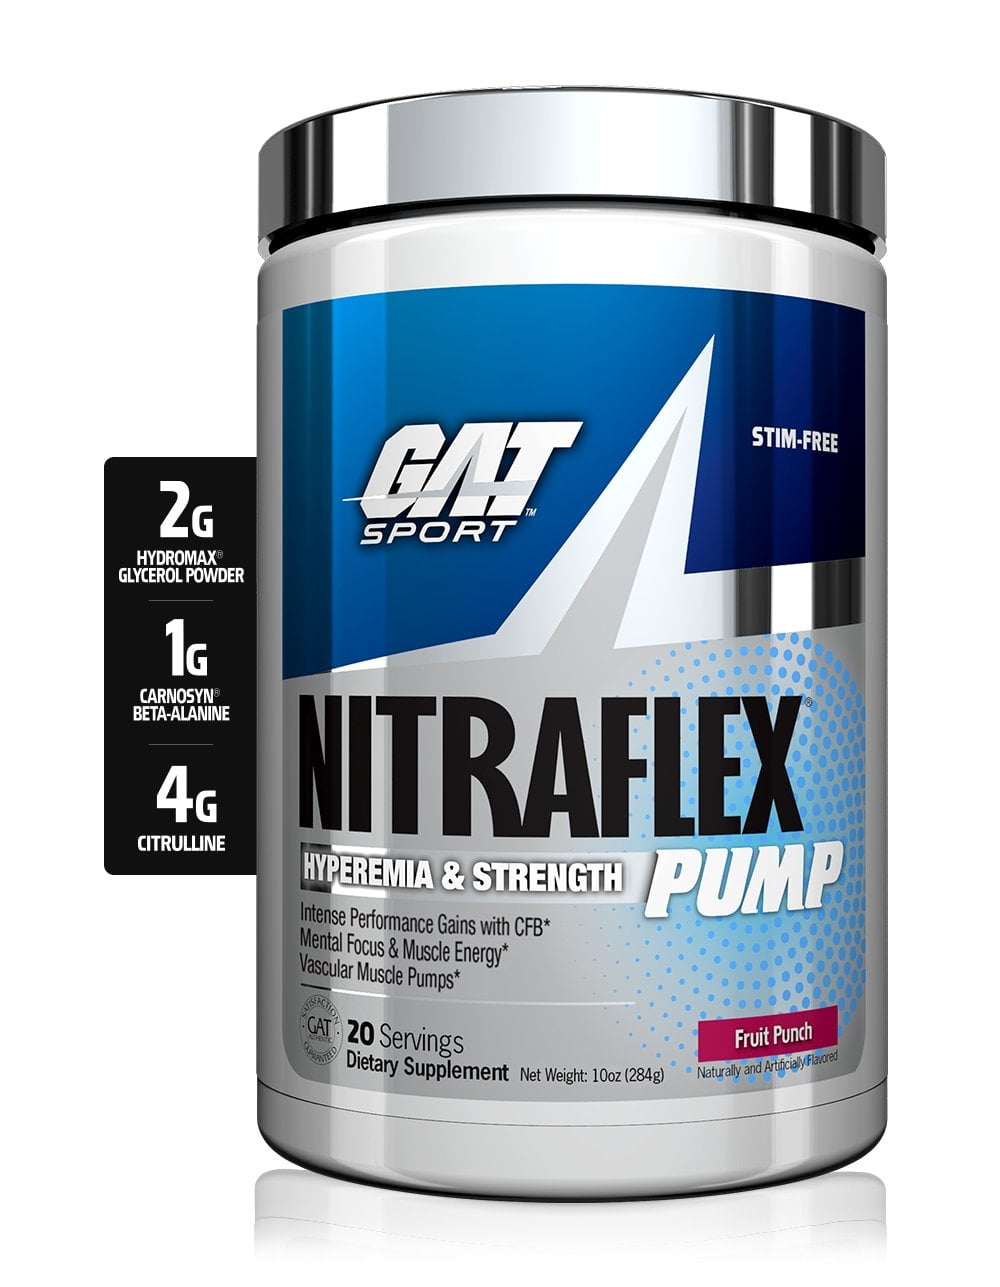 Image Of Gat Nitraflex Pump, 20 Servings Beast Nutrition